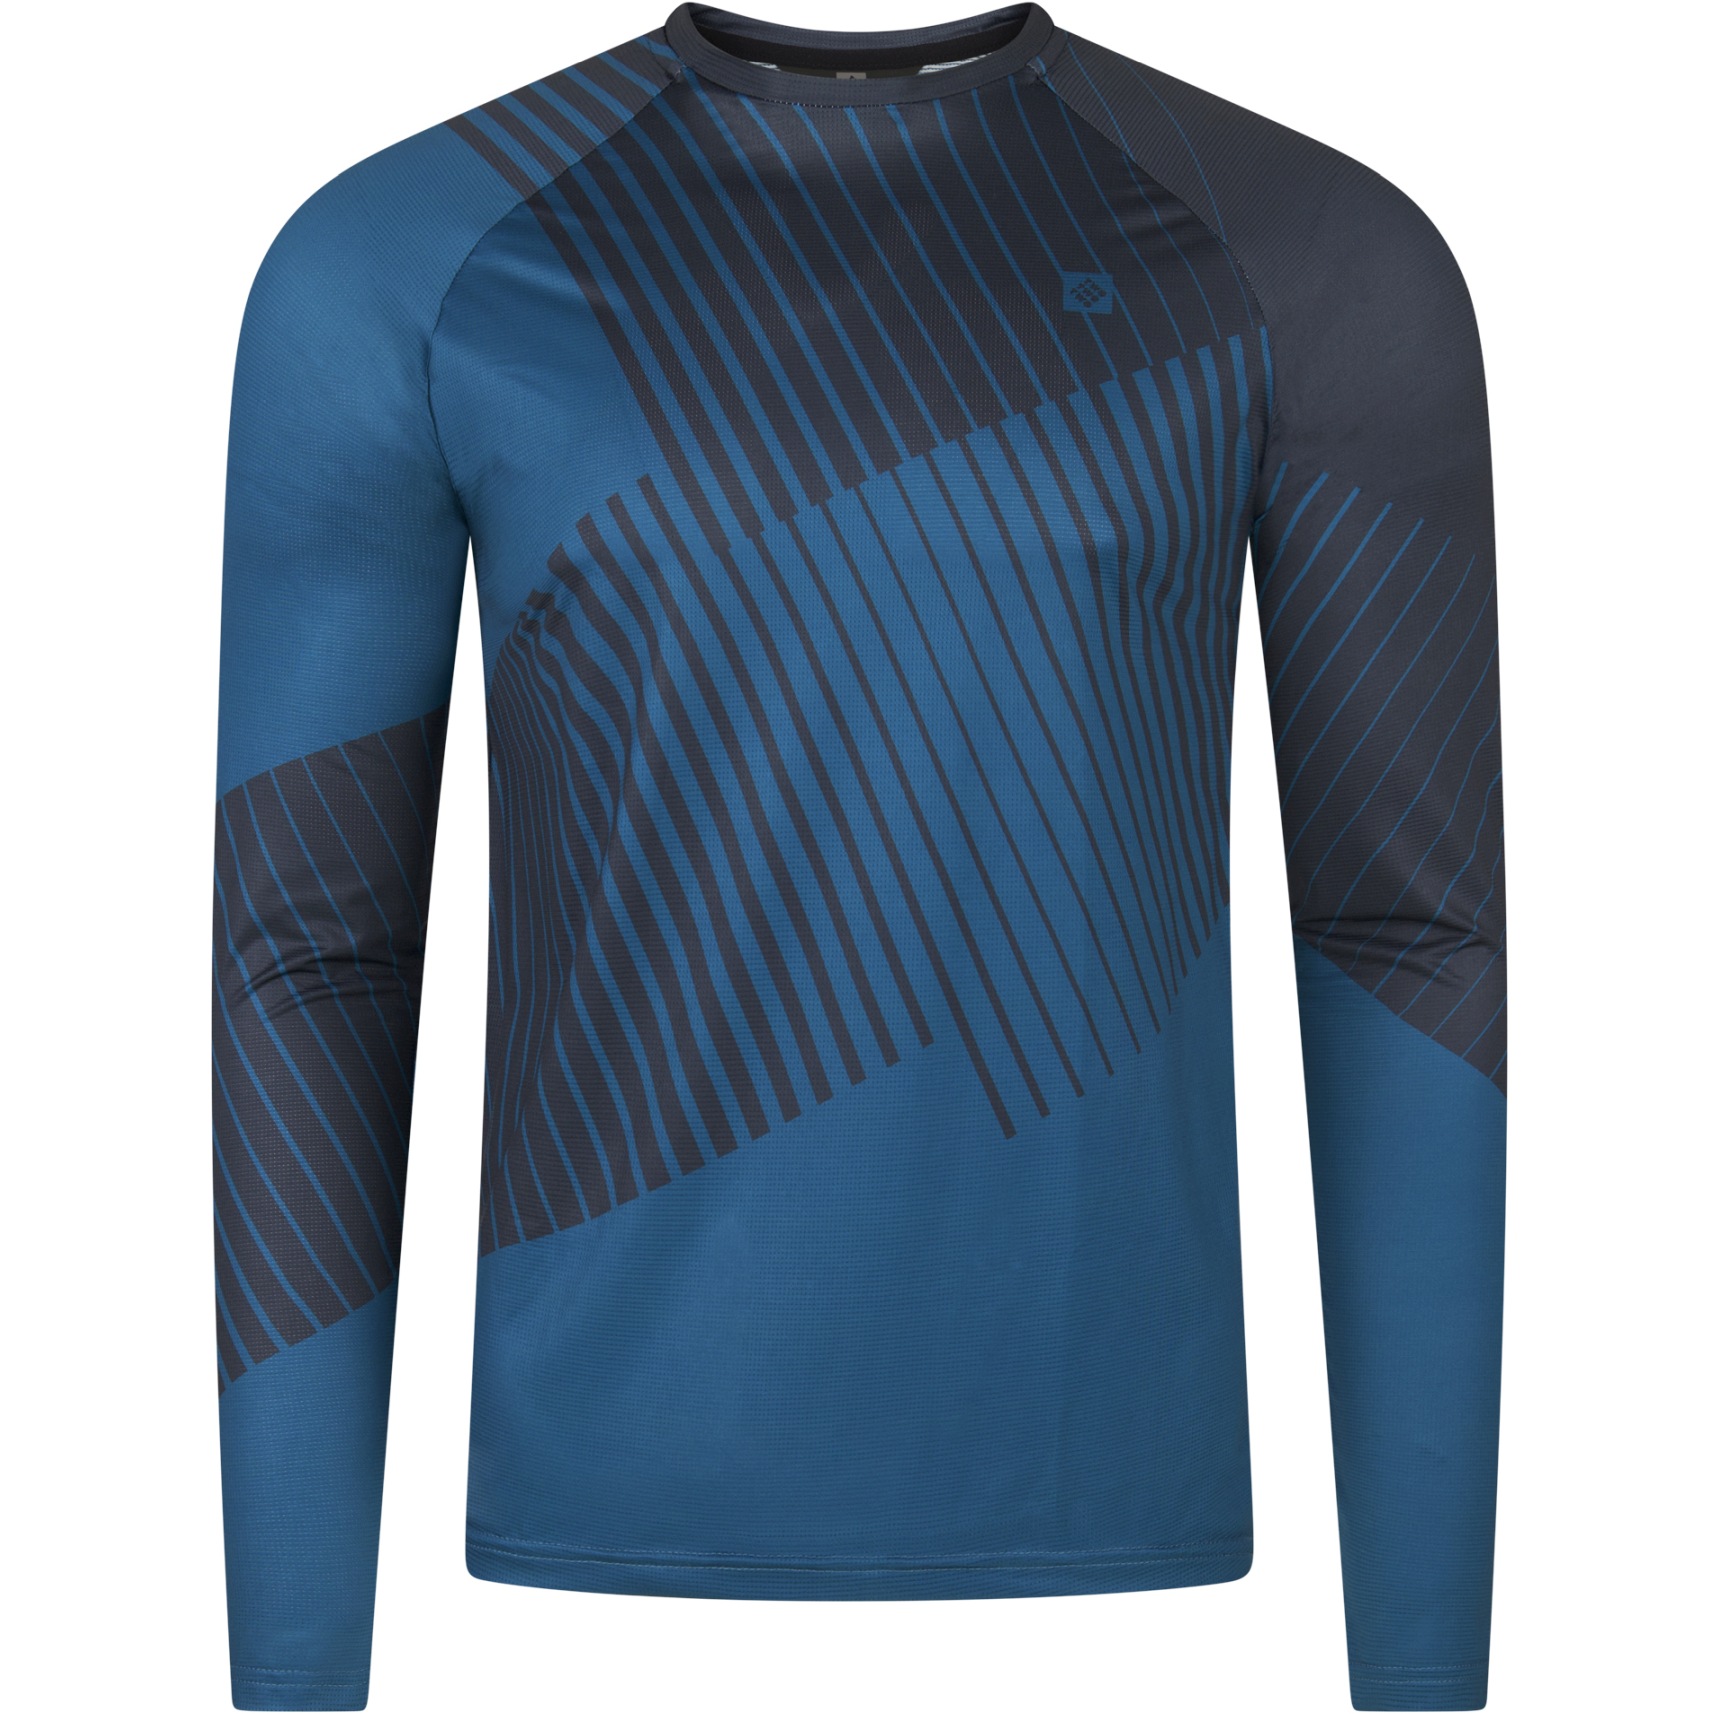 Produktbild von triple2 Swet Evo Langarm-Shirt - bluesteel